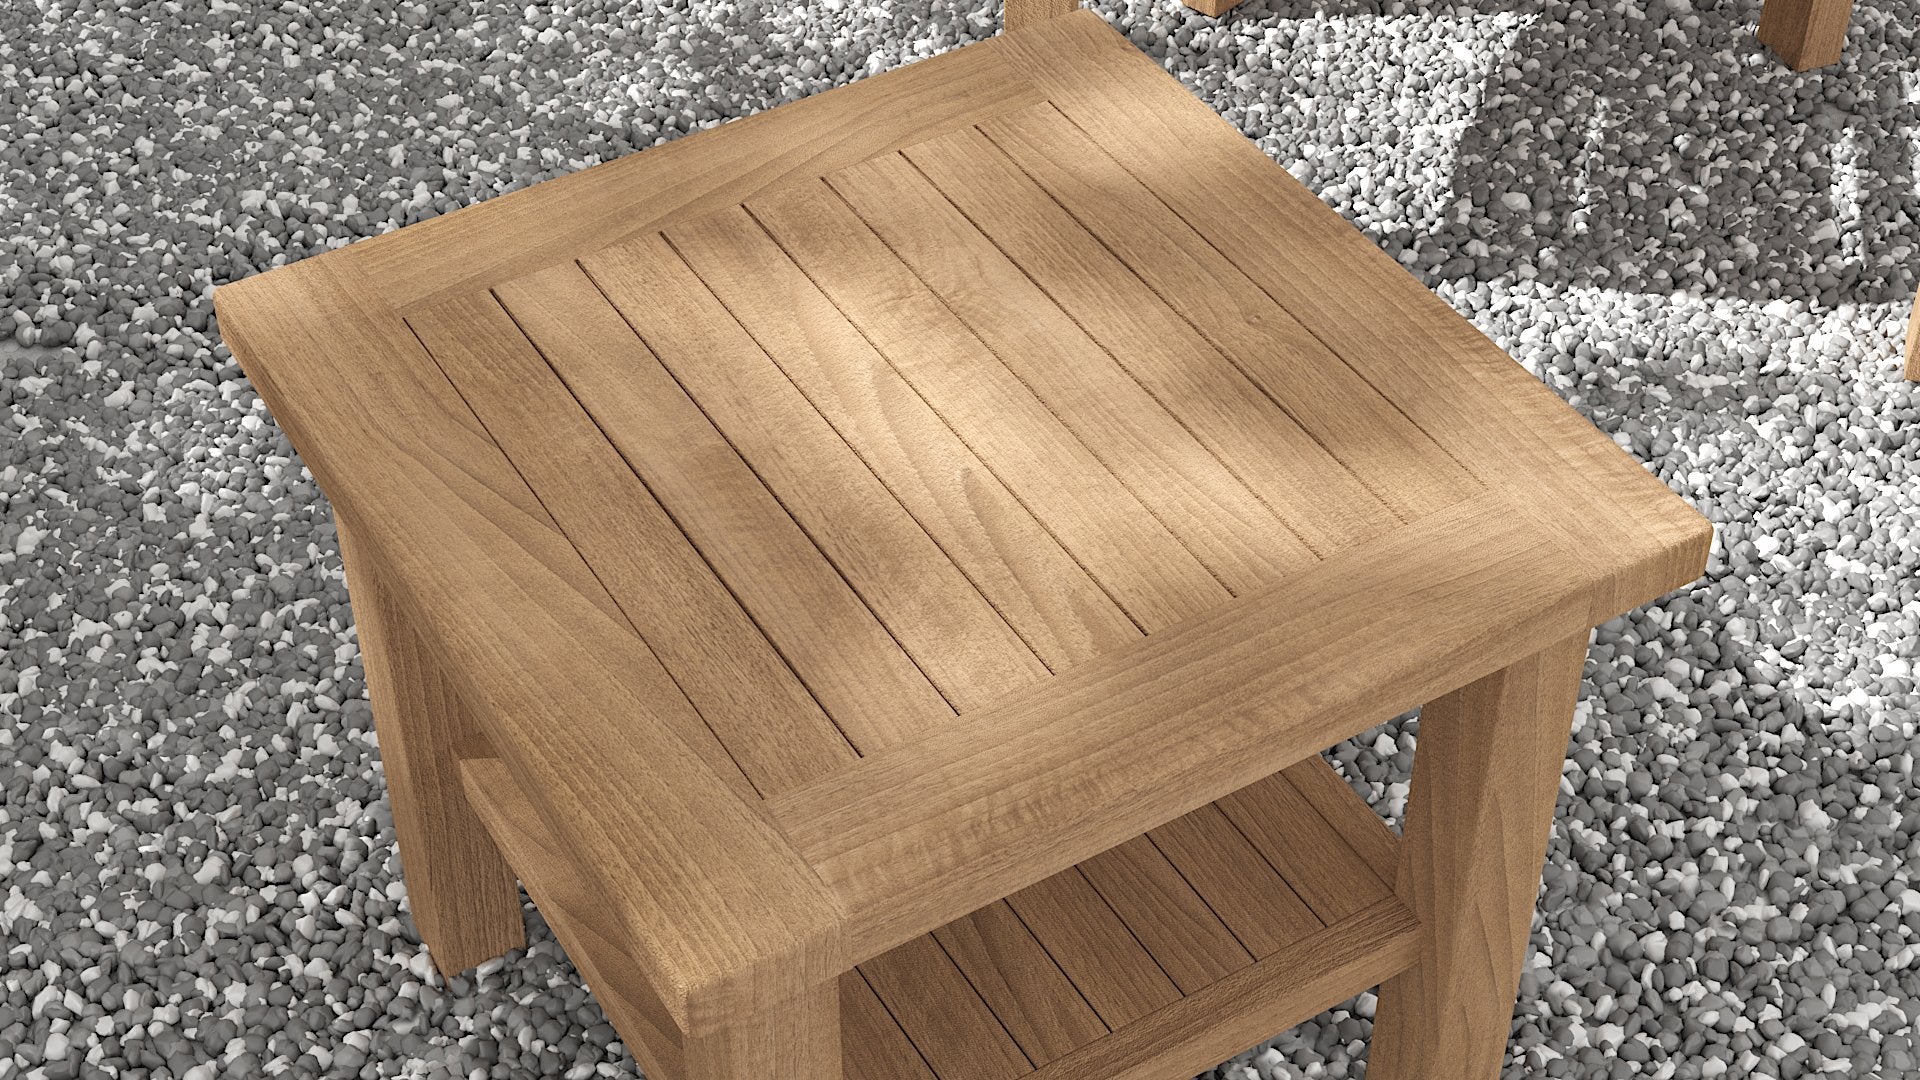 Square Teak Coffee Table 50x50cm